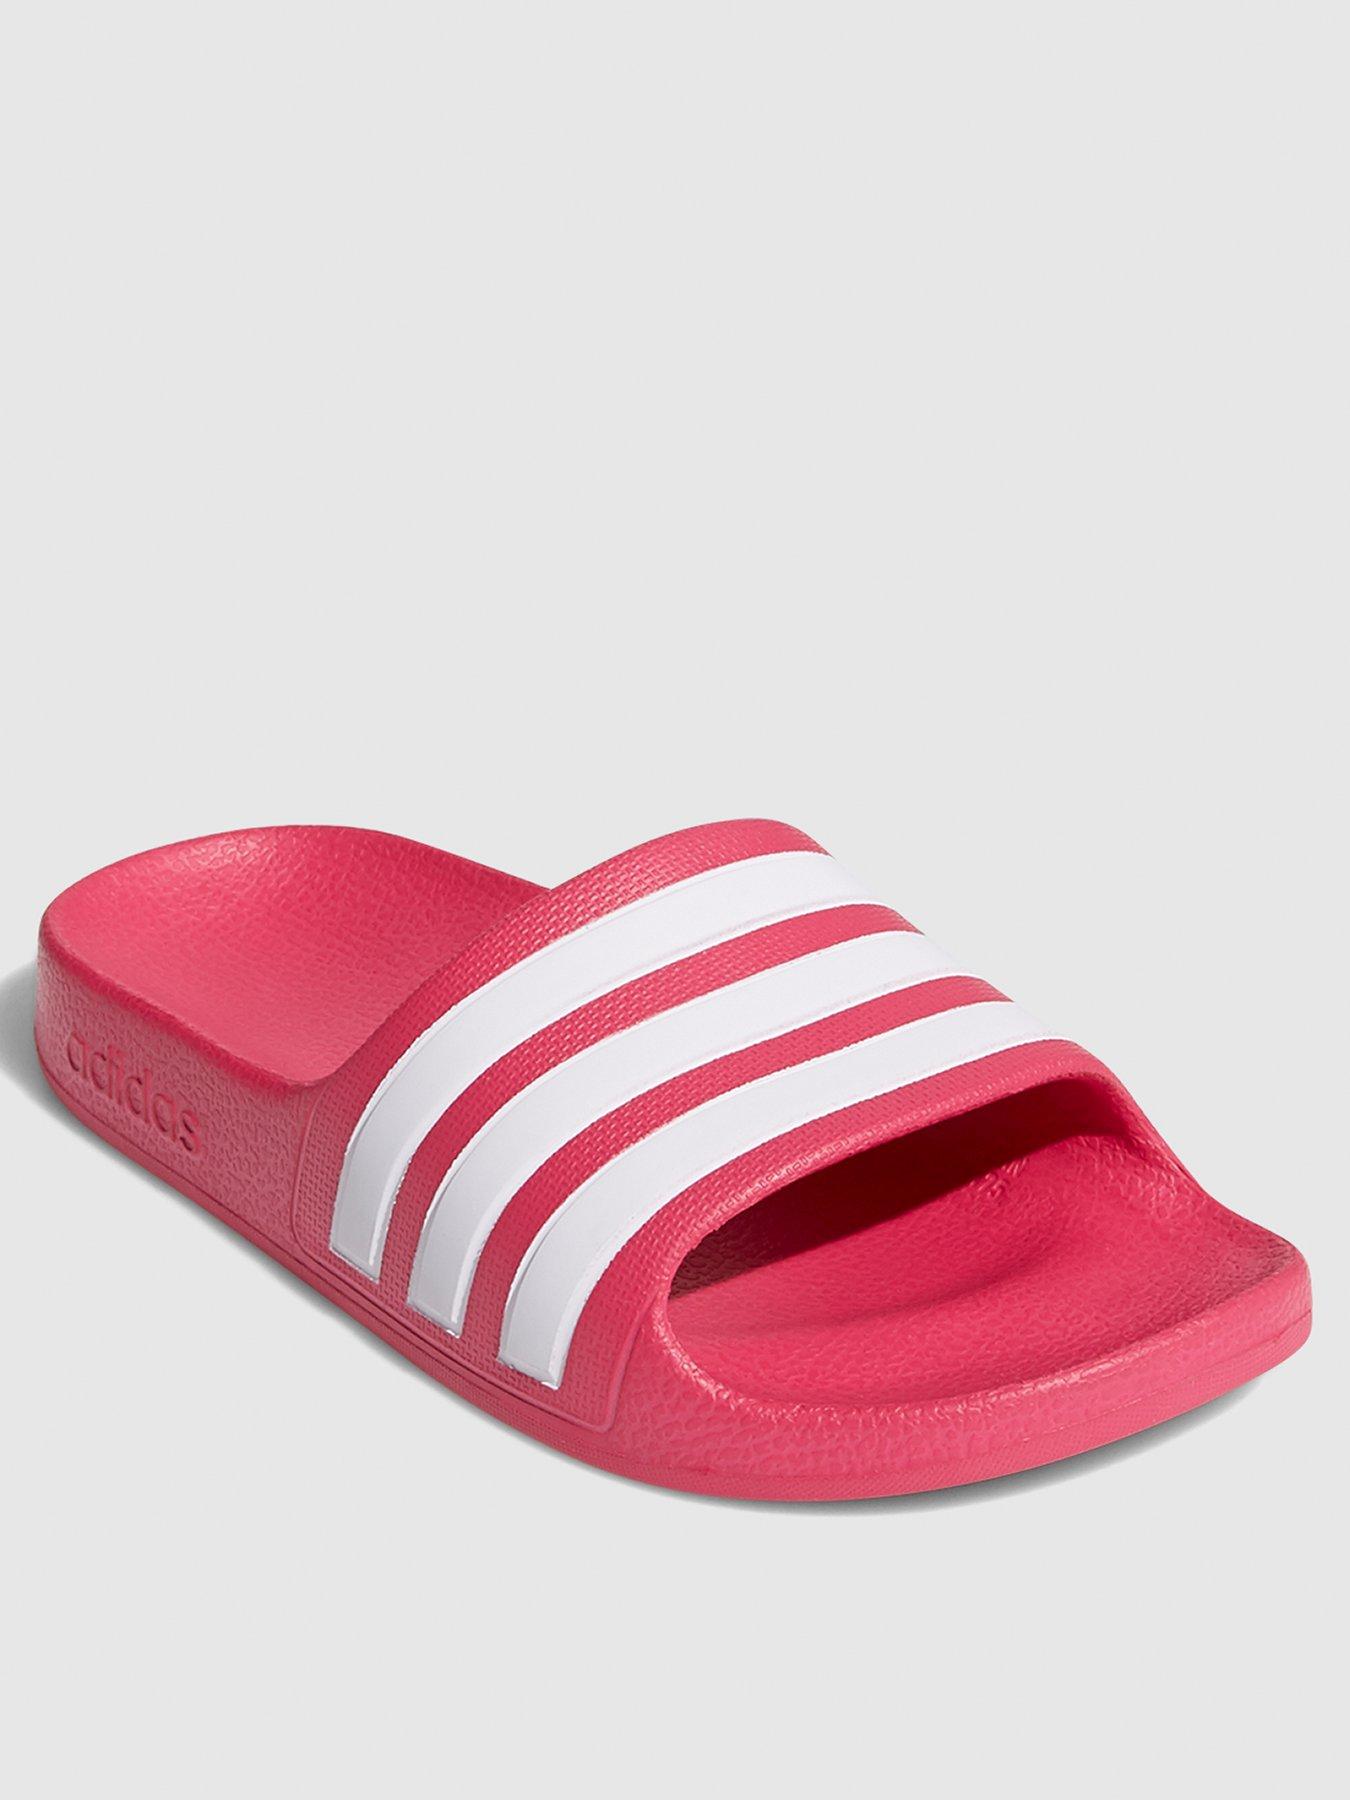 Adidas | Sandals \u0026 flip flops | Shoes 